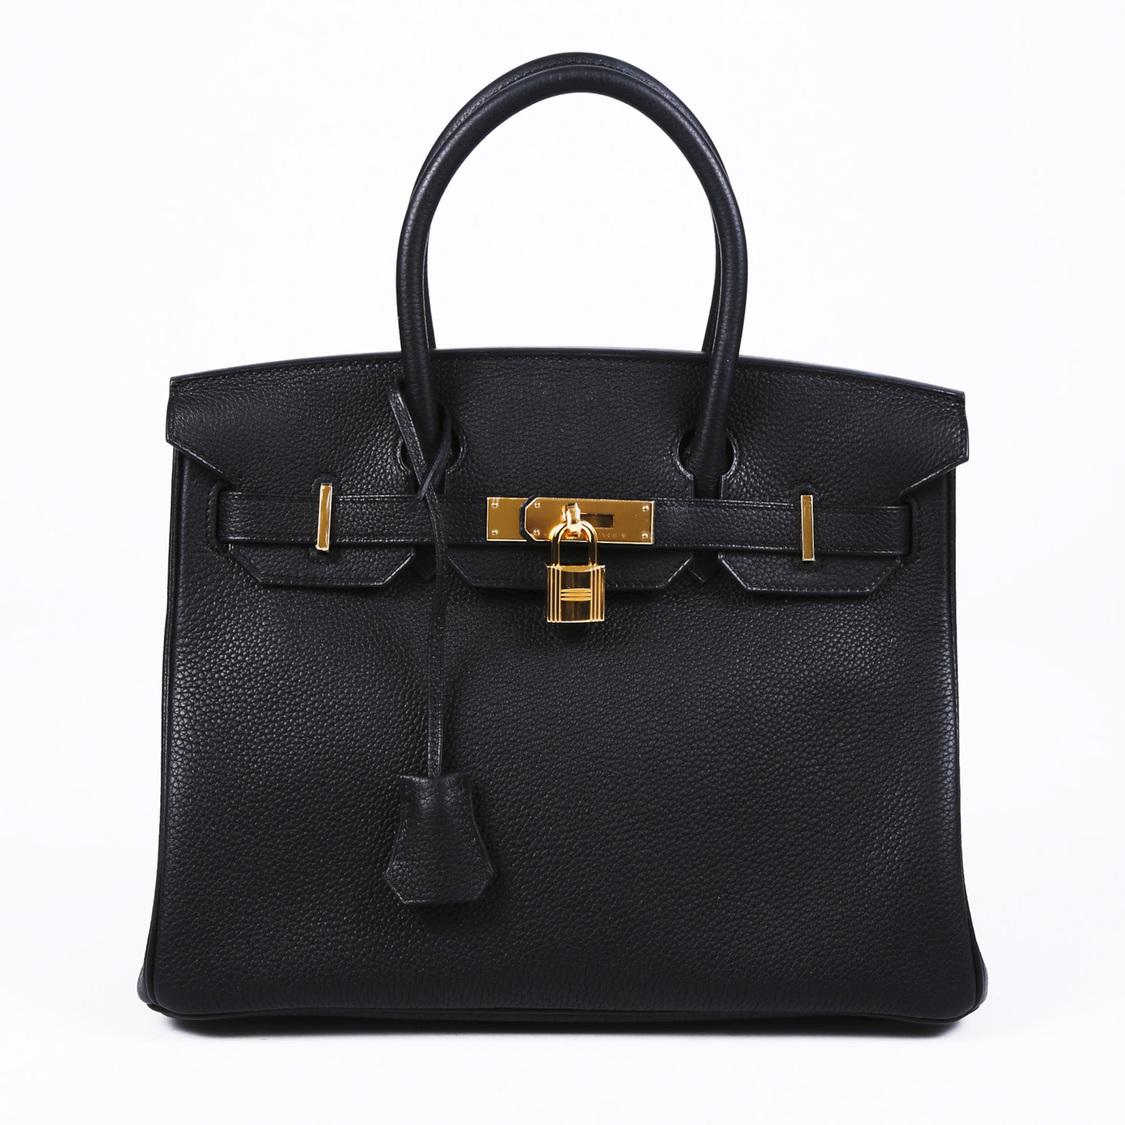 Hermès 2018 Birkin 30 Togo Handbag in Black - Lyst